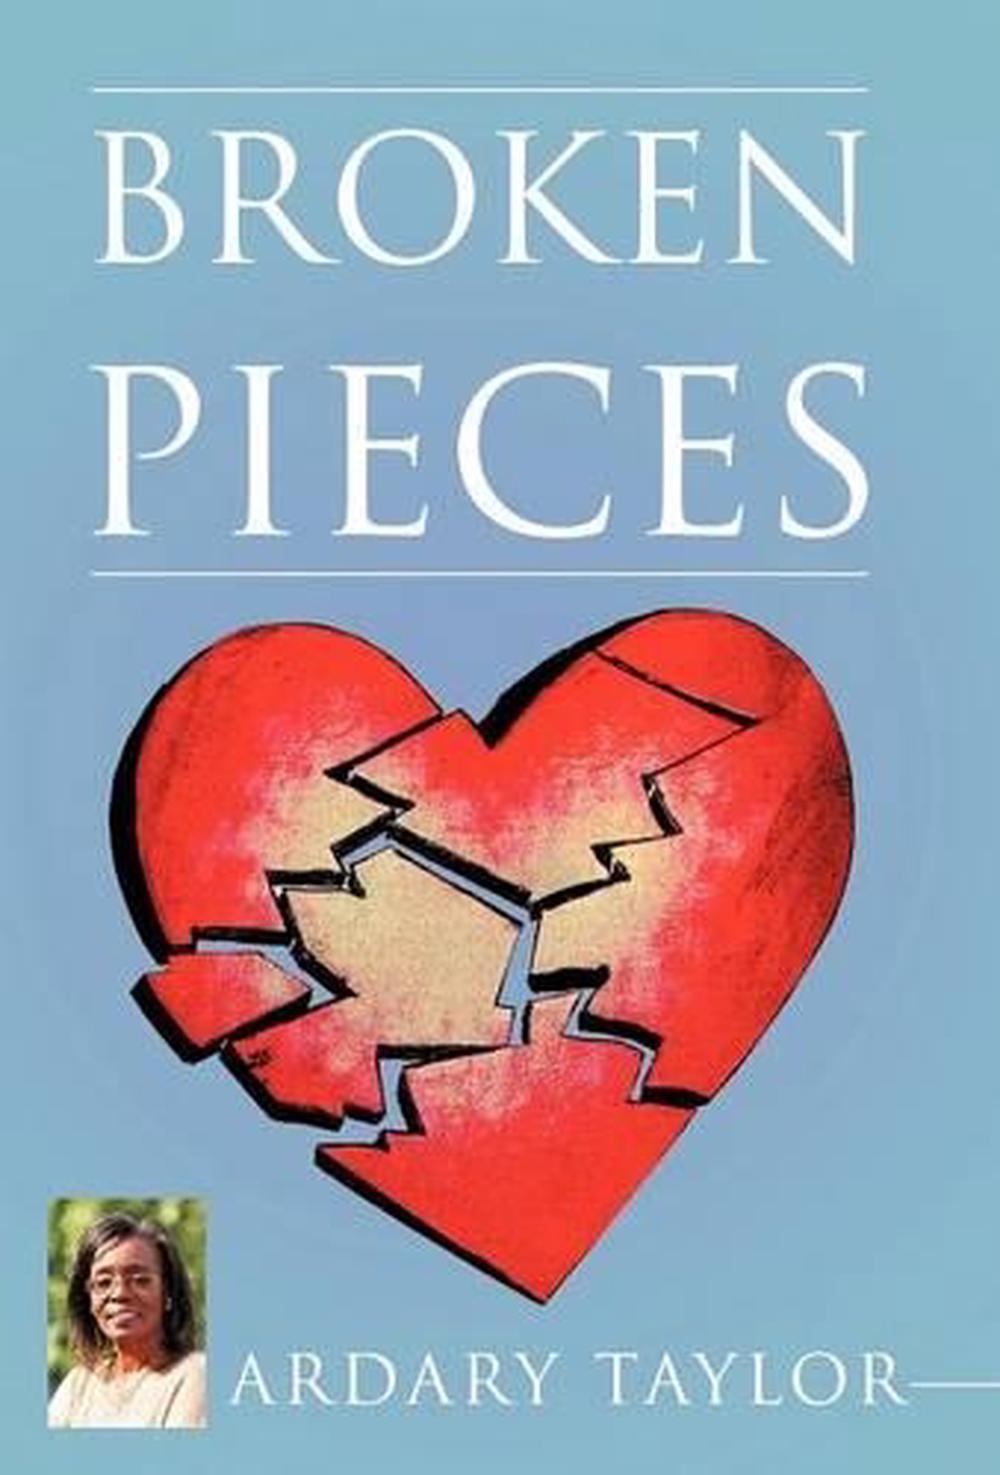 Broken Pieces download